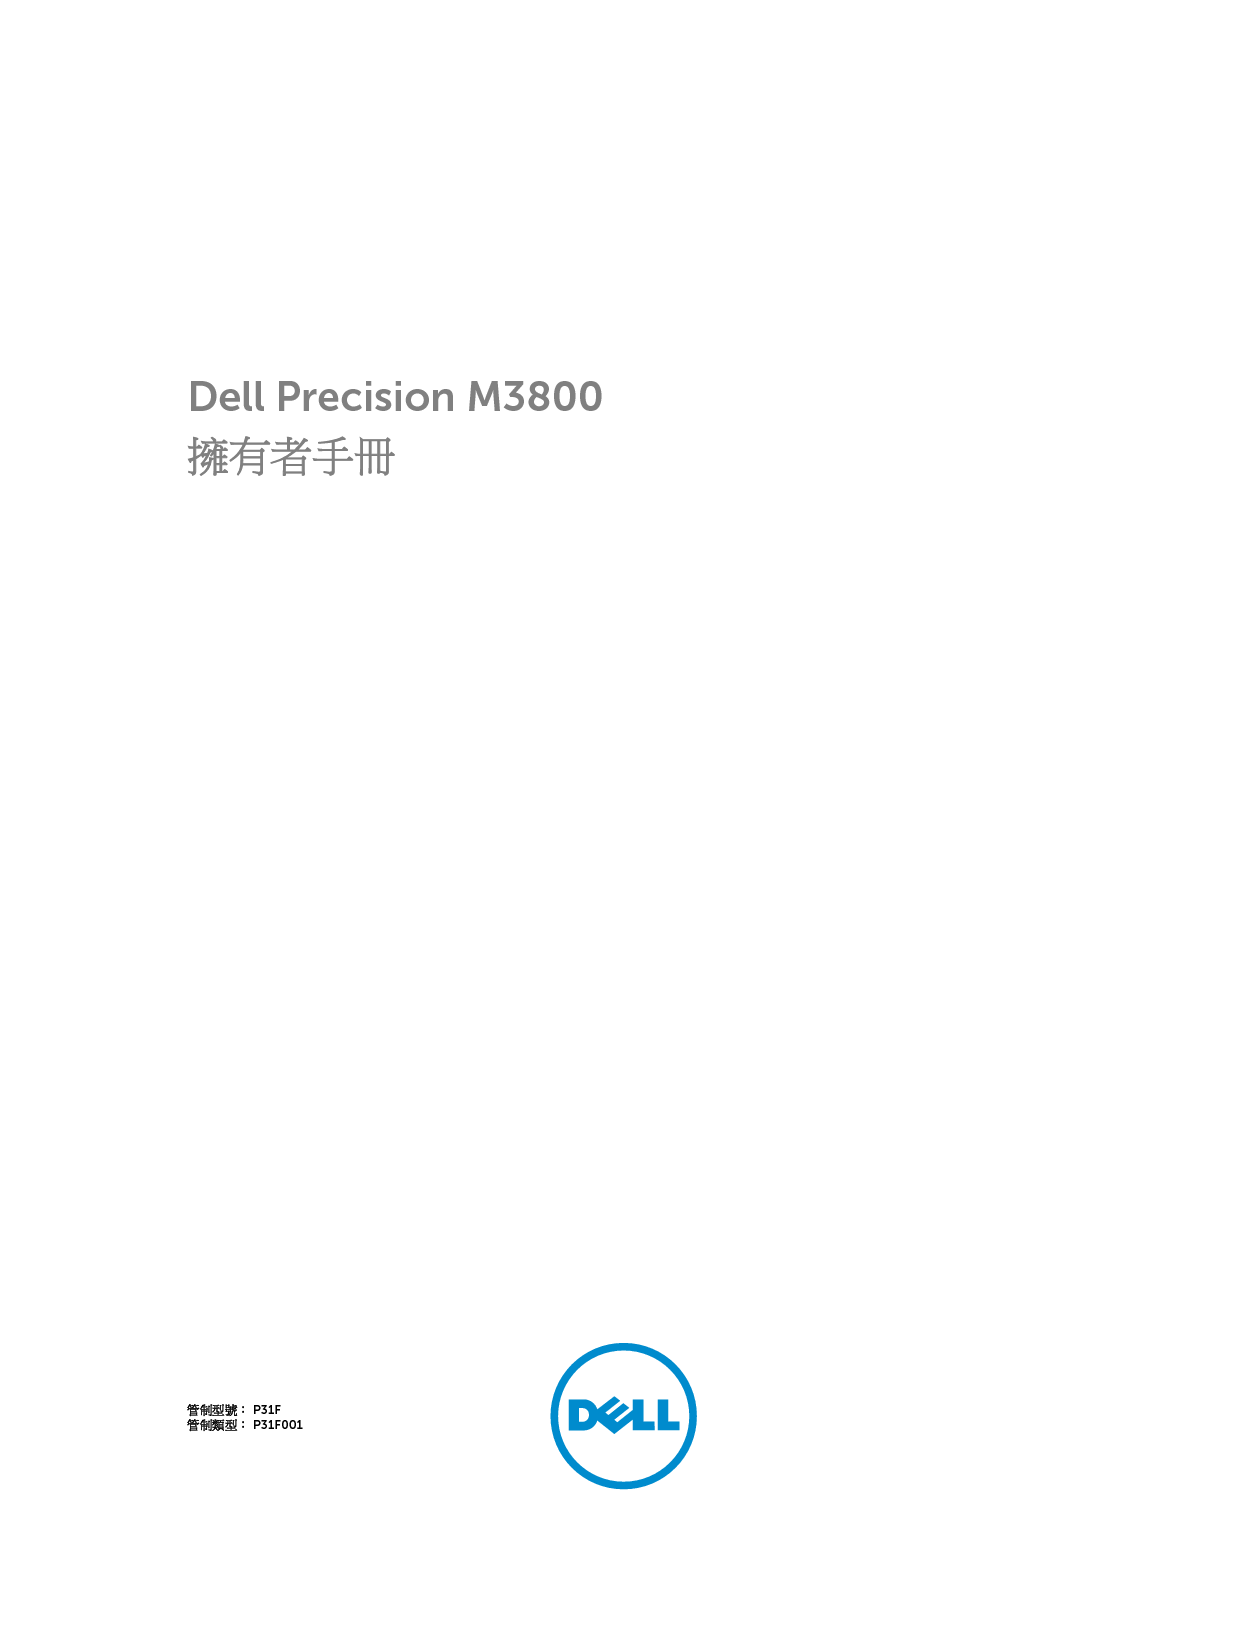 戴尔 Dell Precision M3800 繁体 用户手册 封面